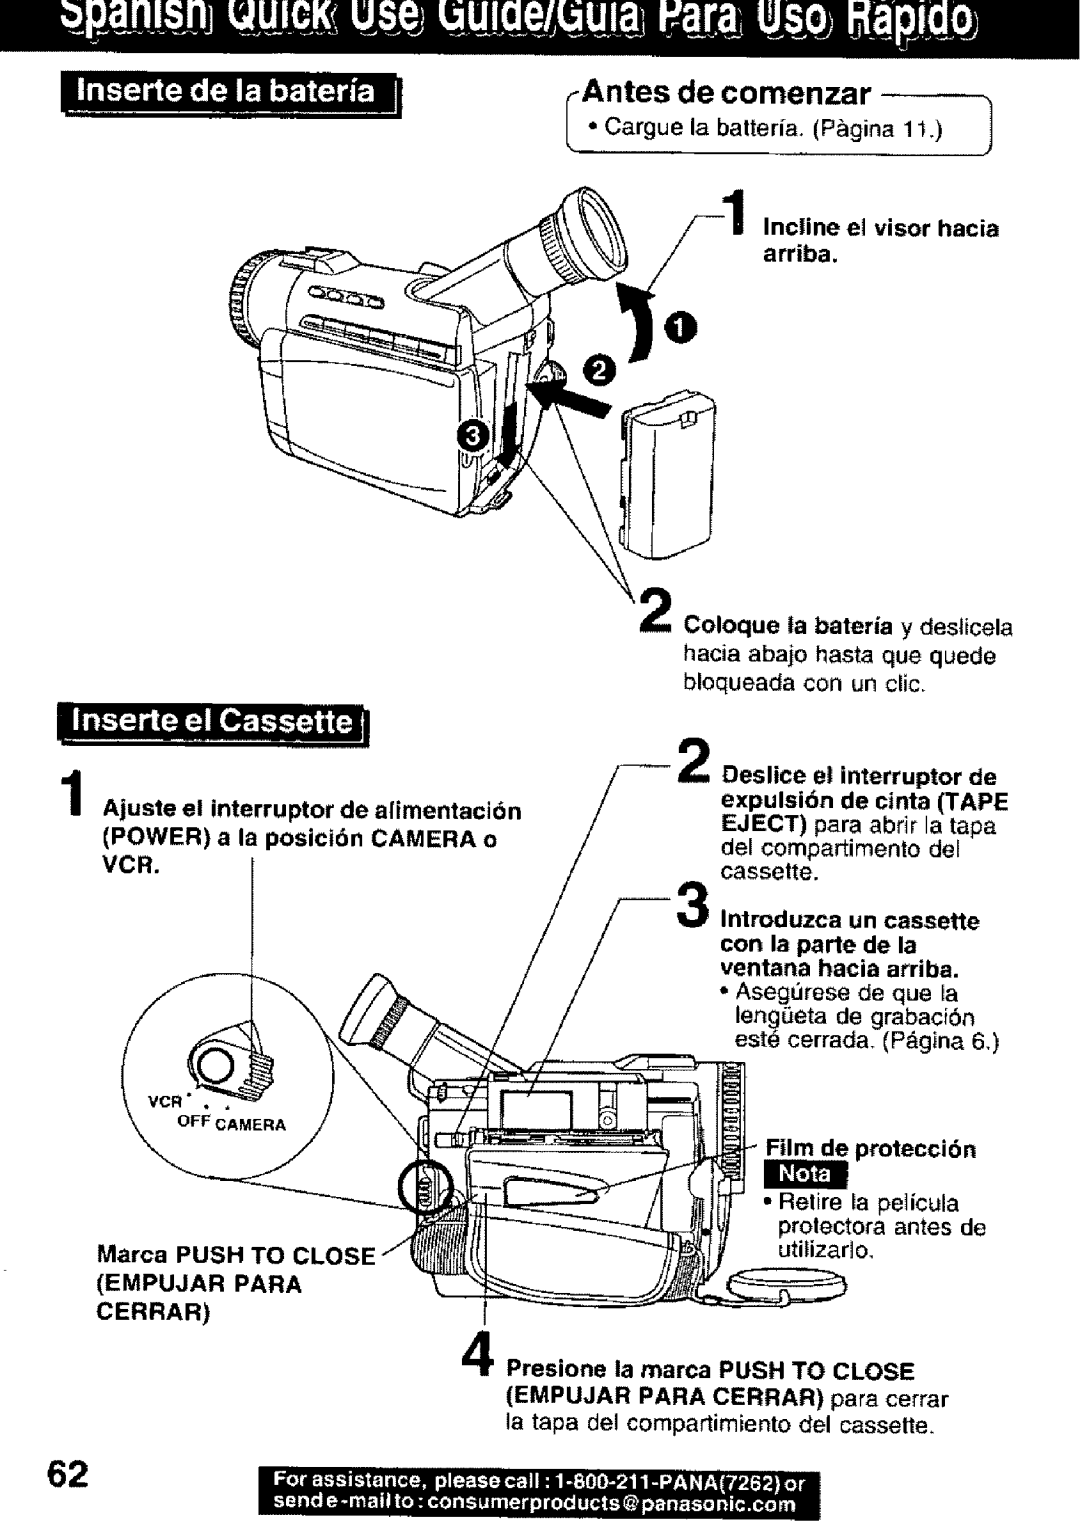 Panasonic PV-DV101 manual iAntes de comenzar 